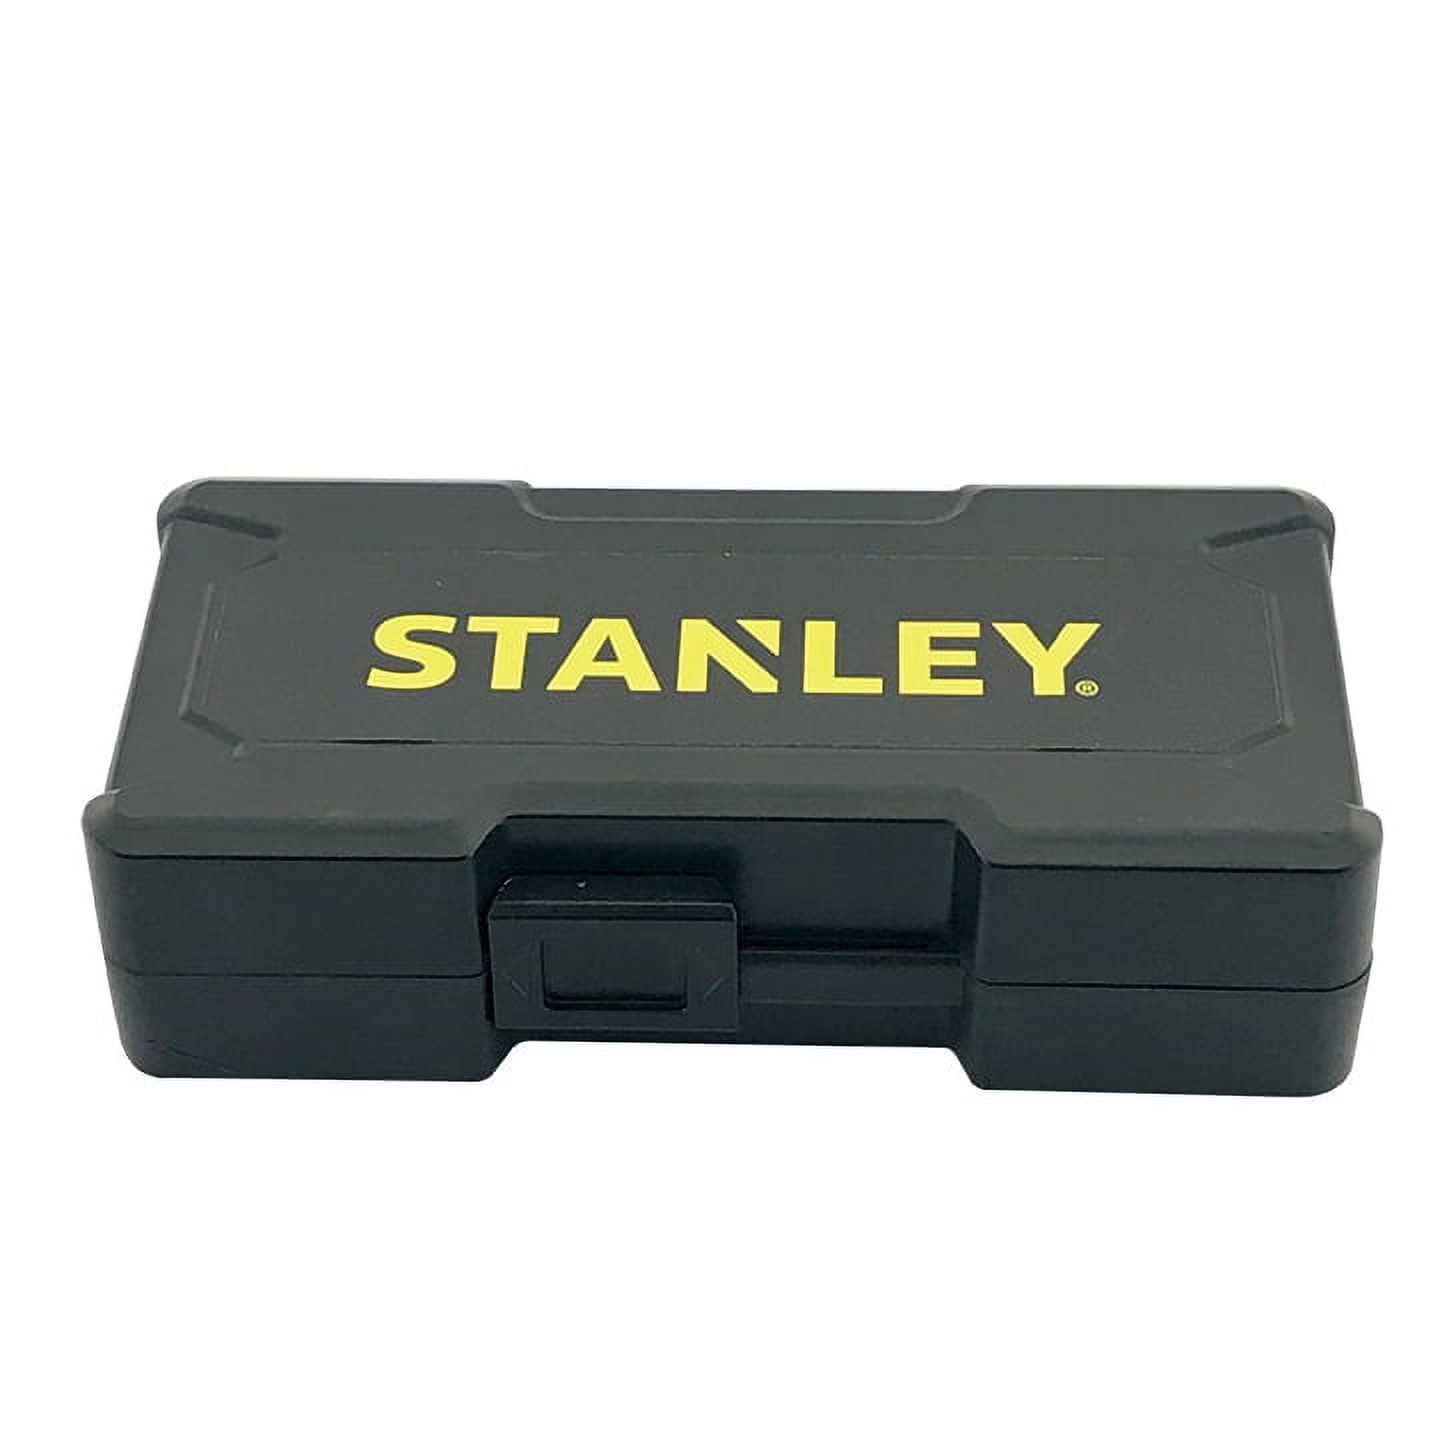 STANLEY STMT81192 37-Piece Micro Mechanics Tool Set